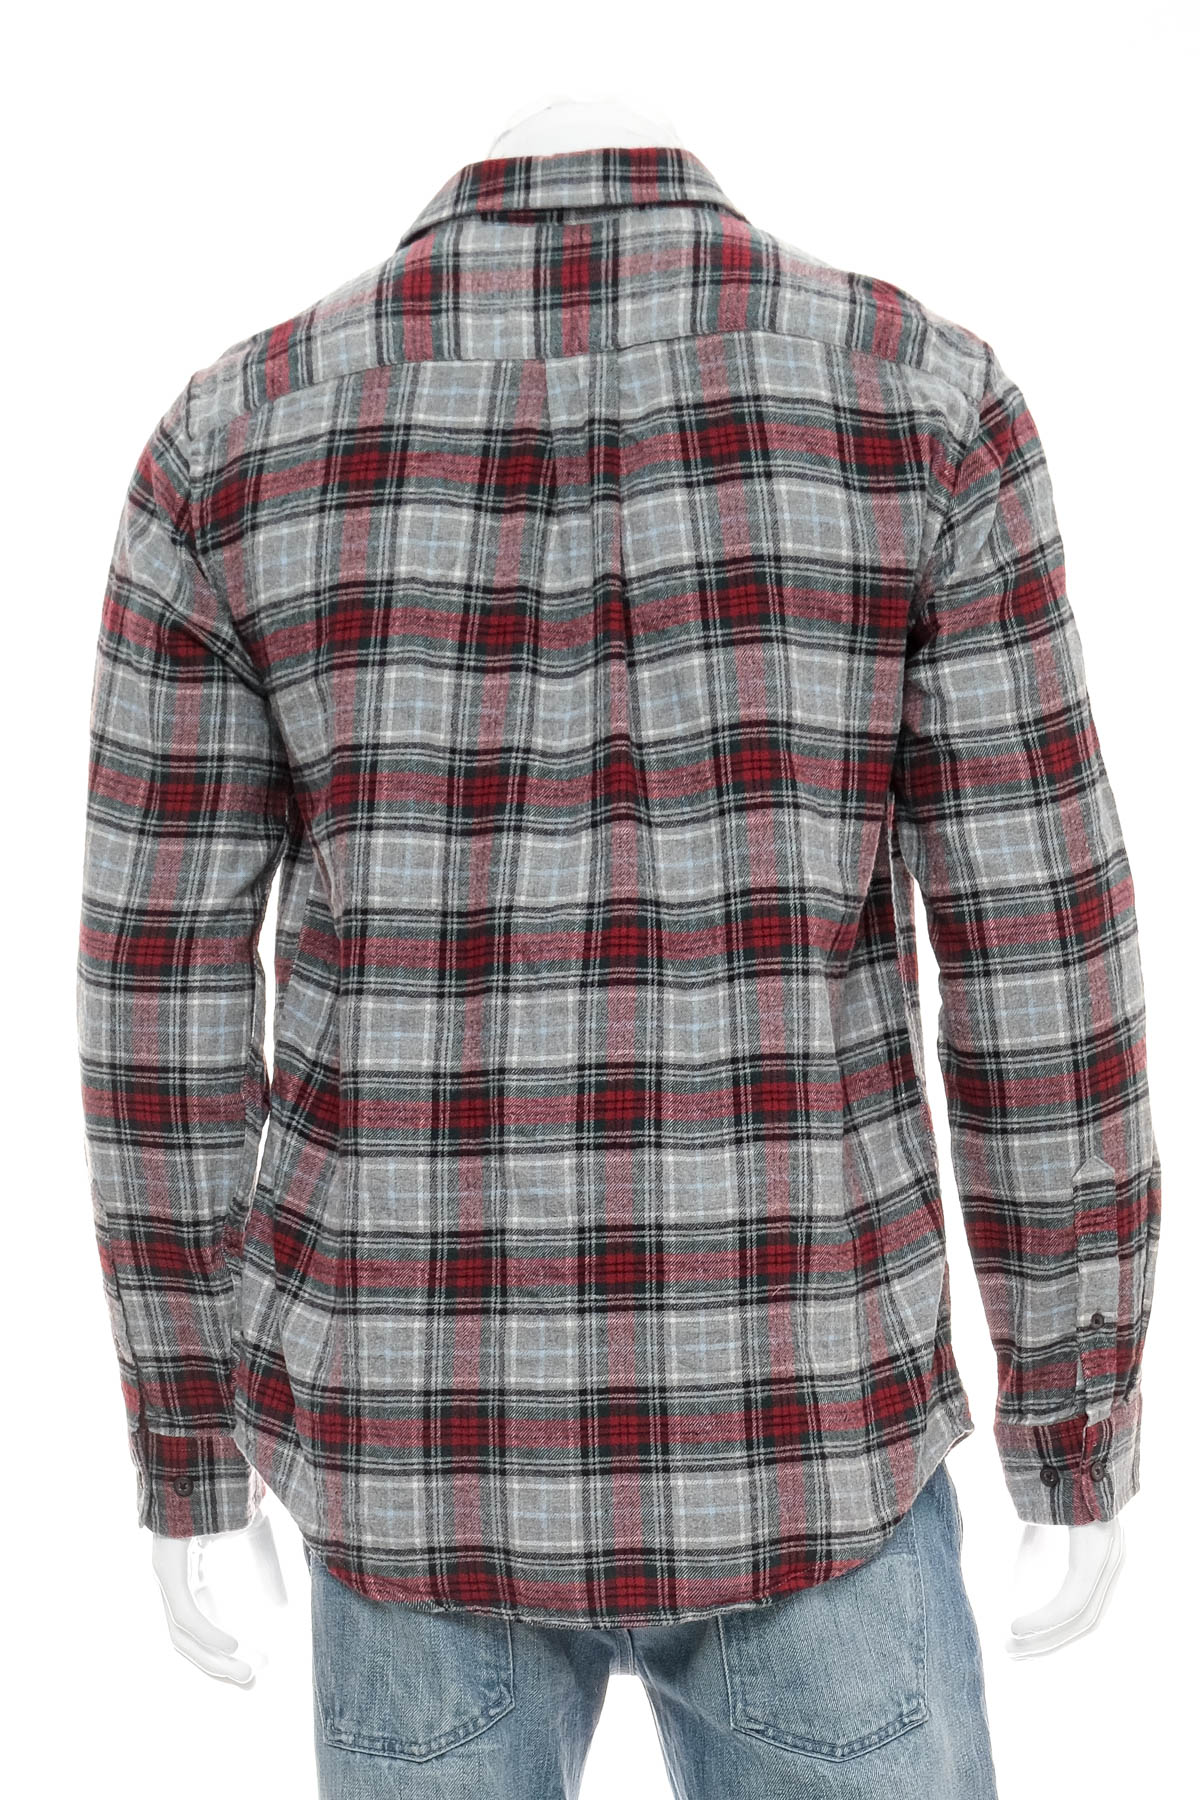 Men's shirt - Croft & Barrow - 1